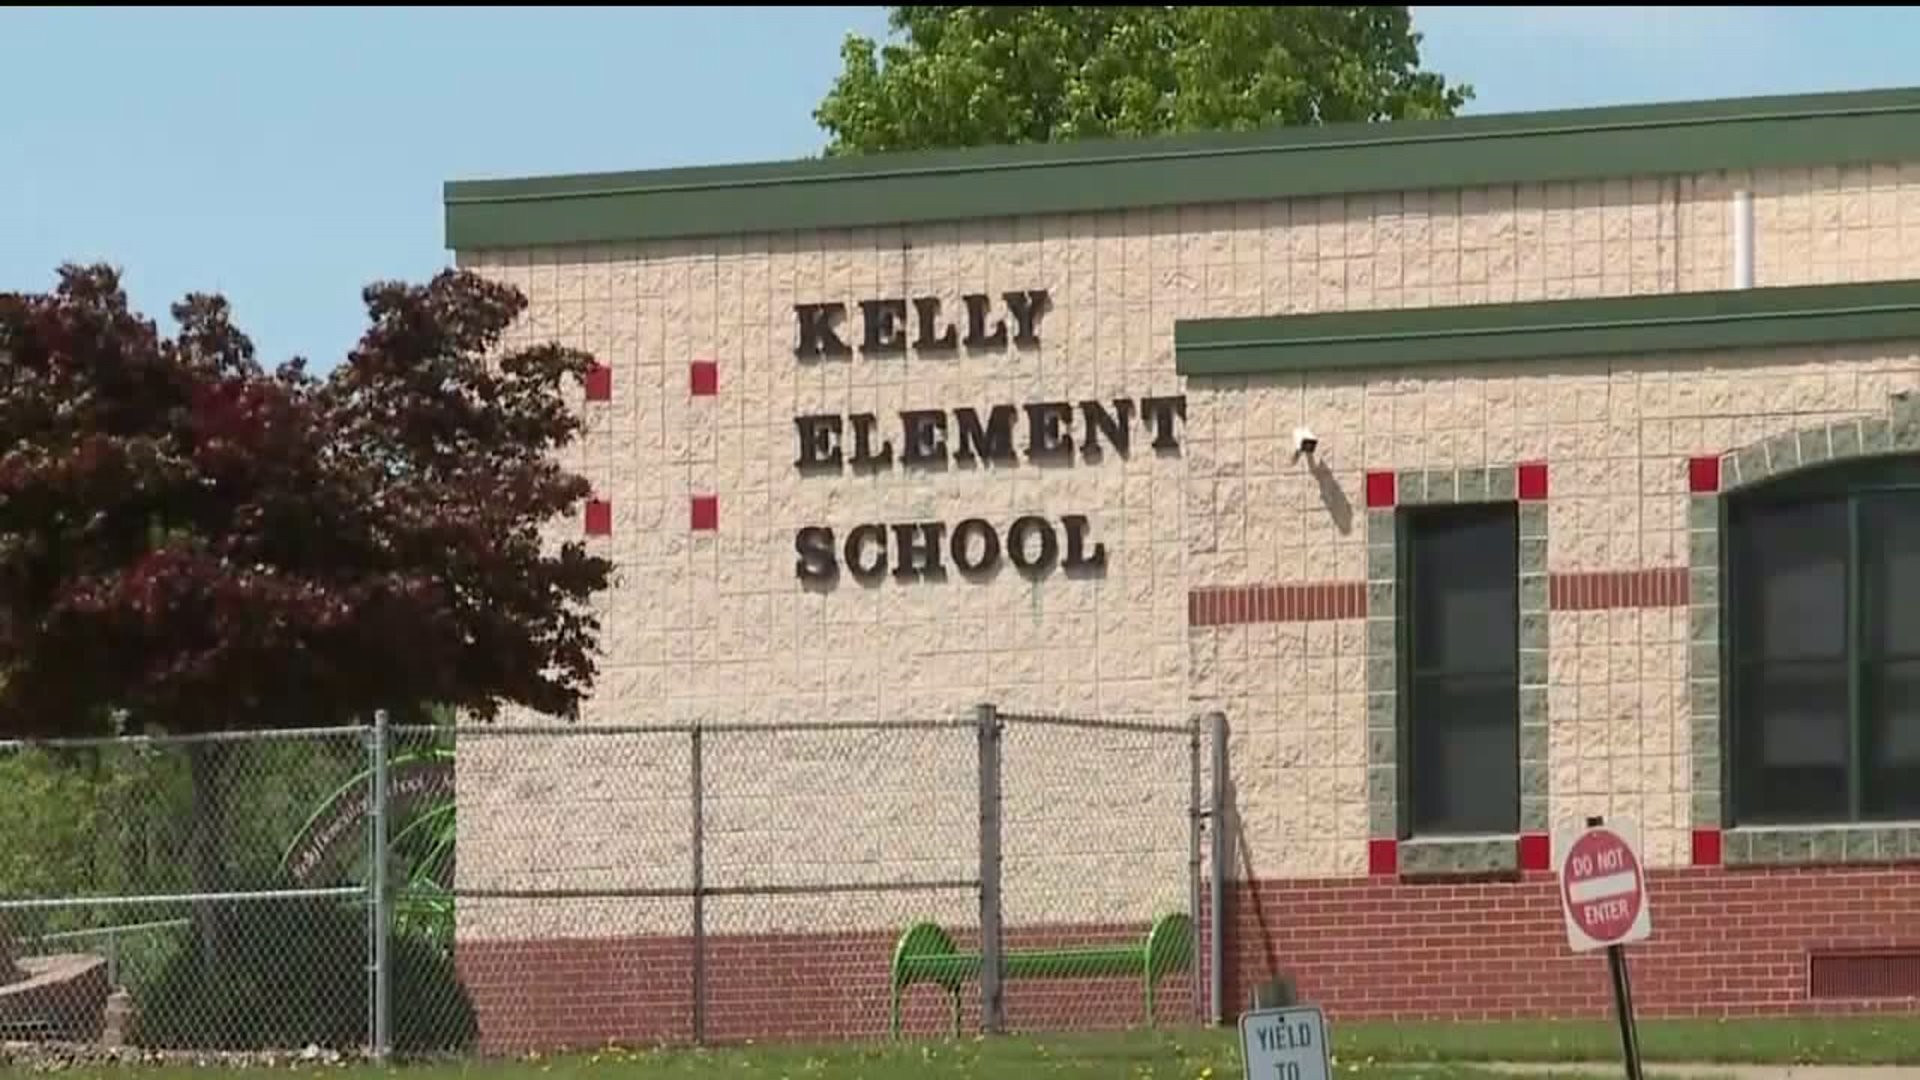 Teacher in Lewisburg Area Accused of Abusing Student